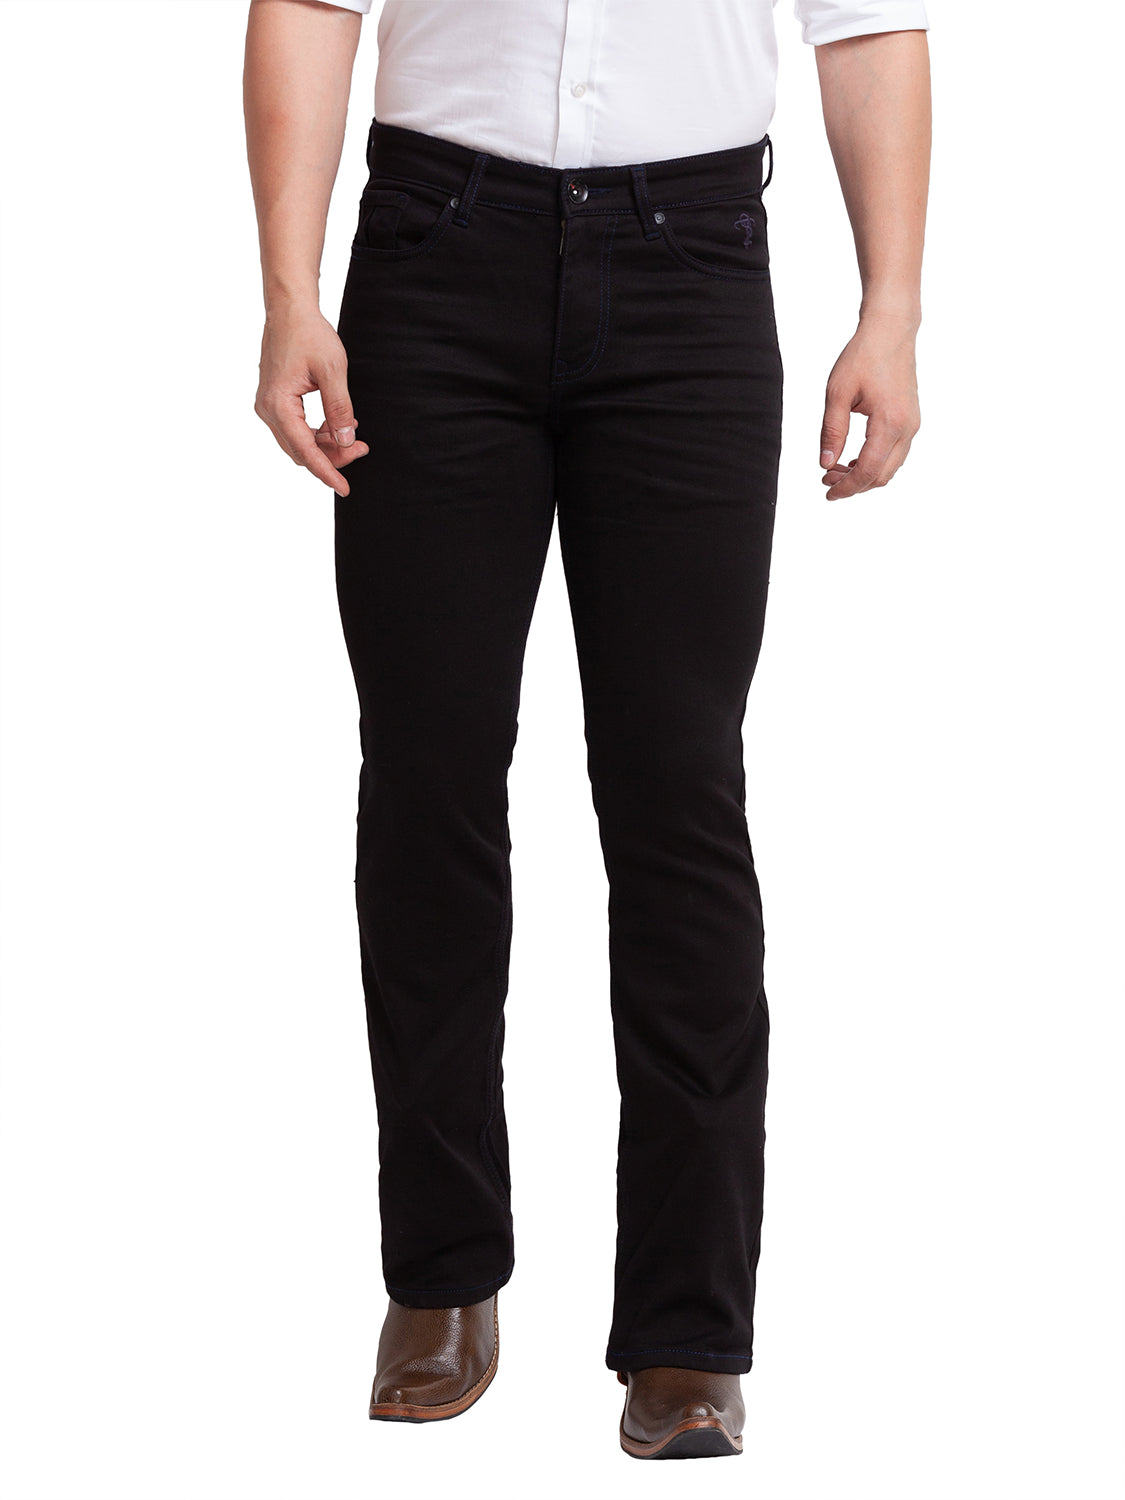 Black Clean Look Bootcut Jeans for Men